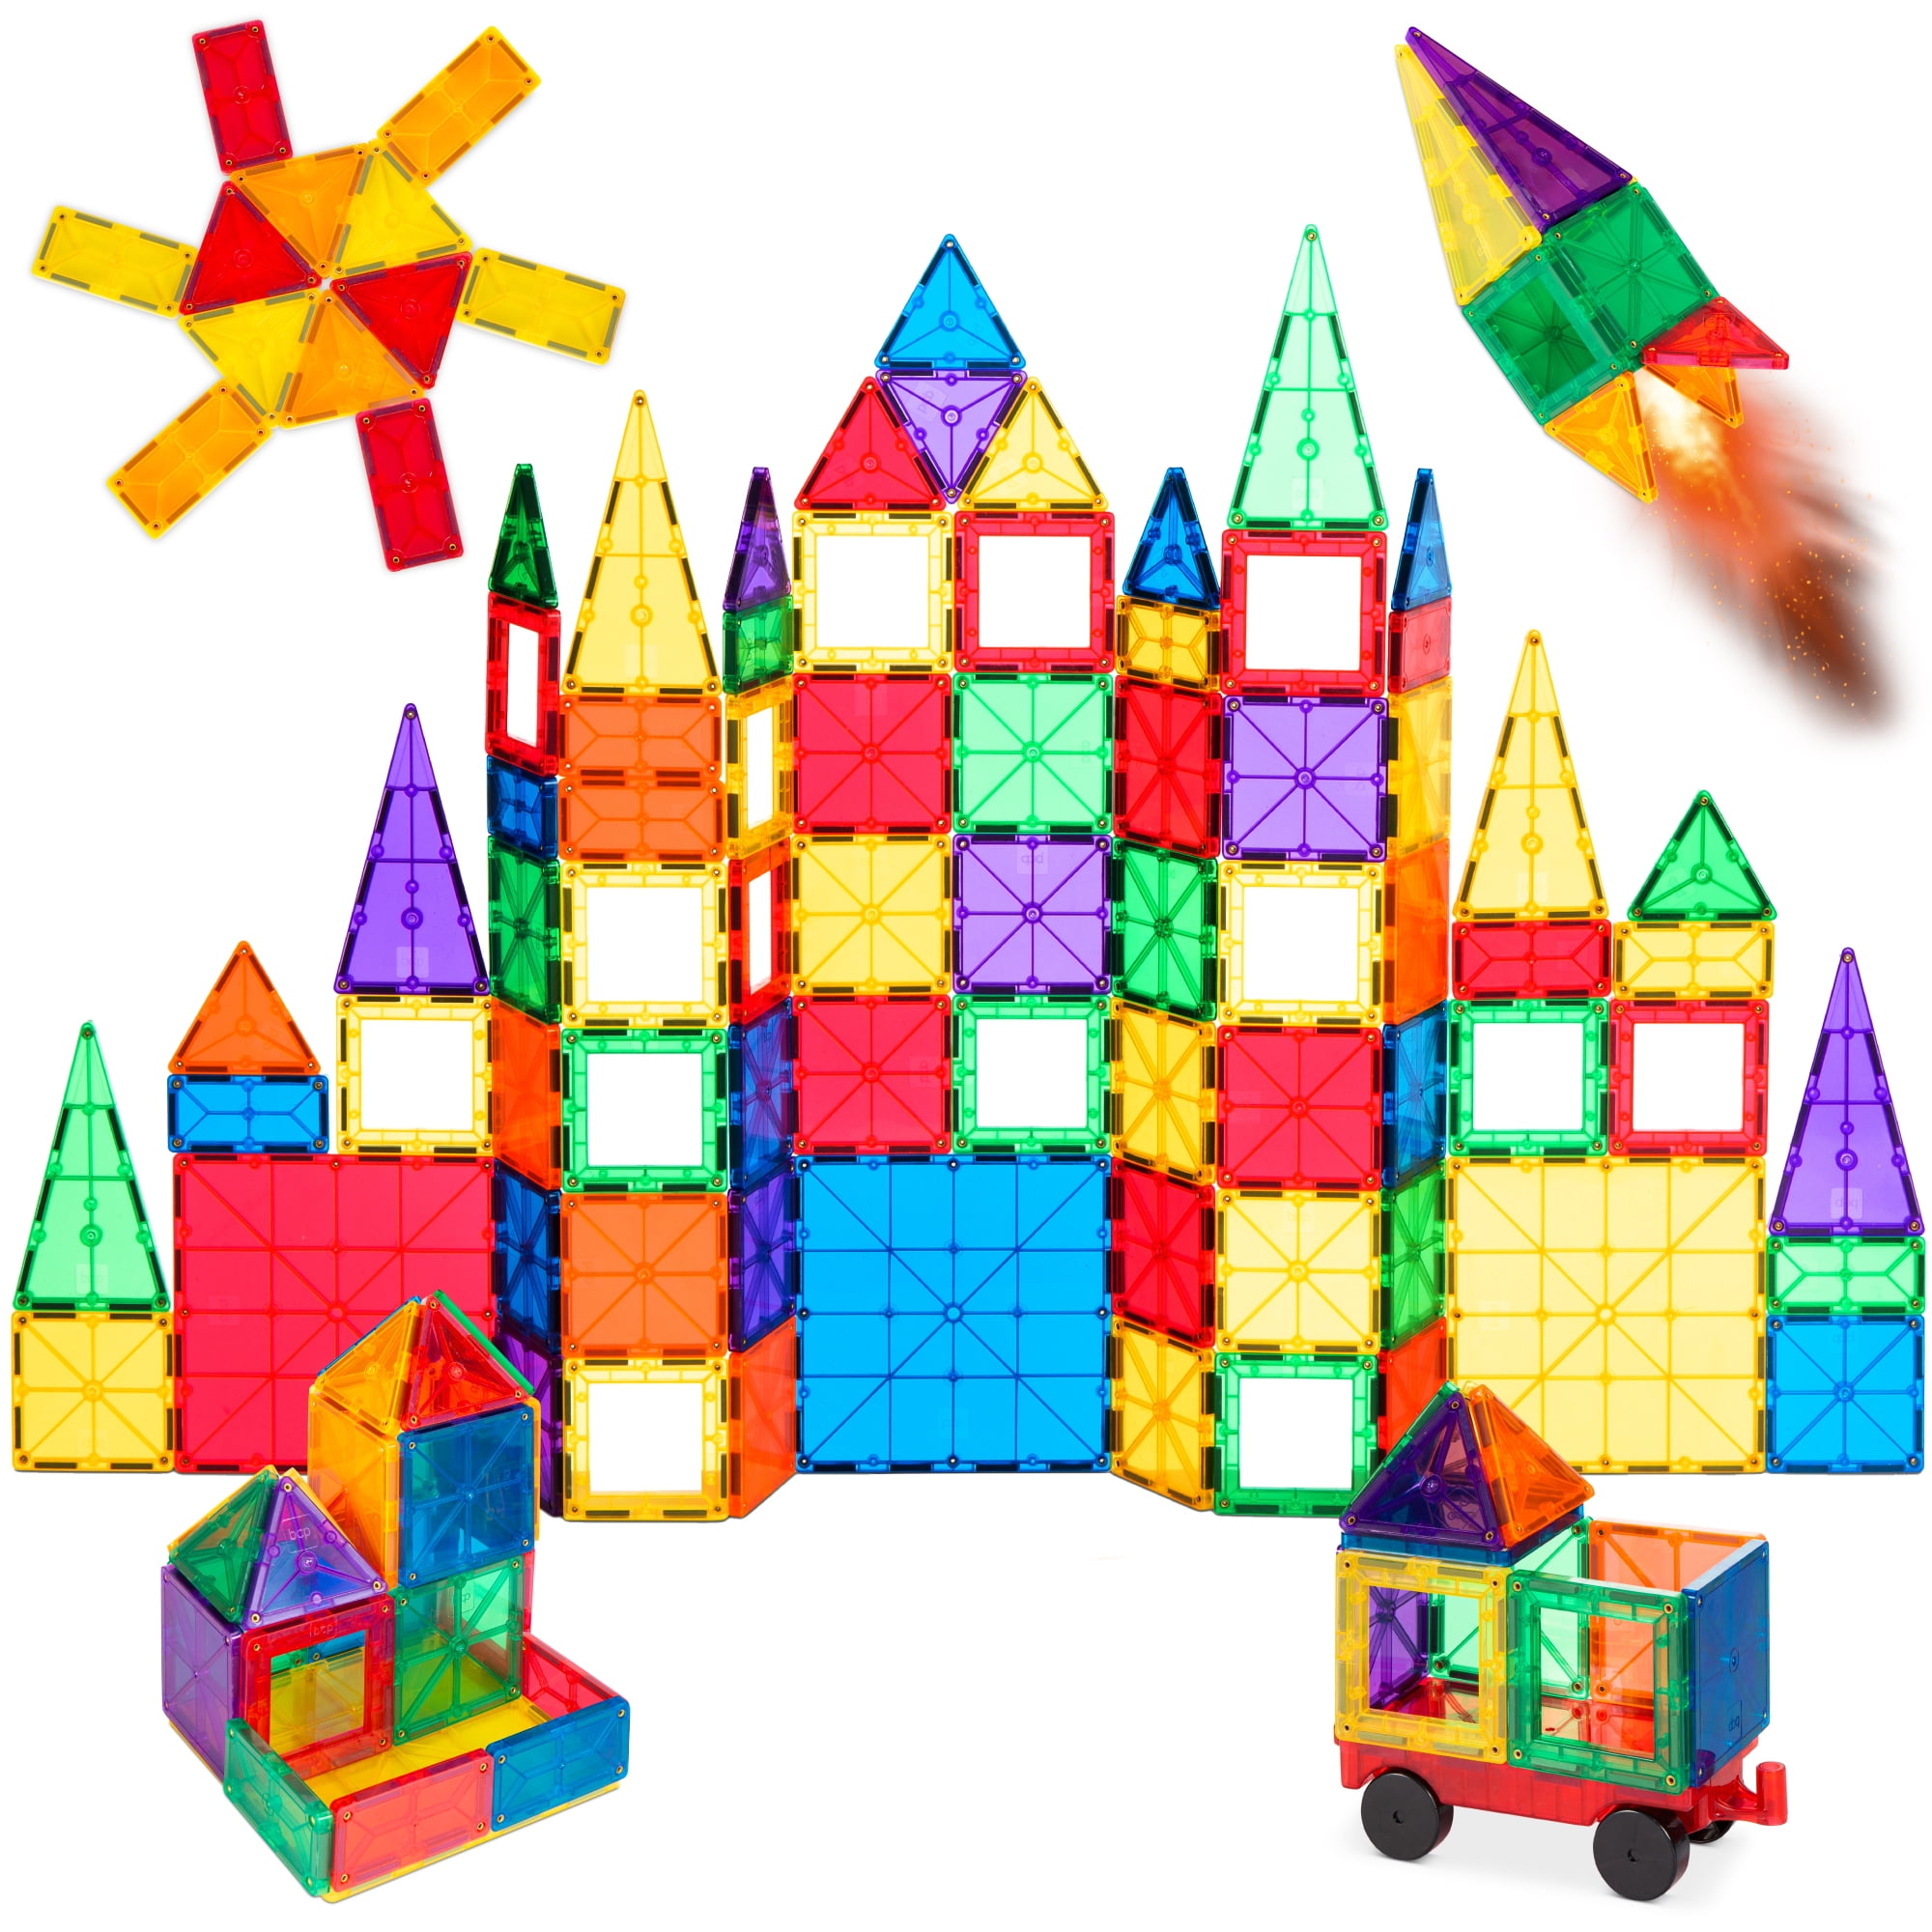 ASOK Magnetic Building Tiles Toy Set for Kids Magnetic Blocks 3D Castle Magnetic Educational Toys Tiles Set for 3 4 5 6 7 Years Old Boys Girls Gifts 176pcs